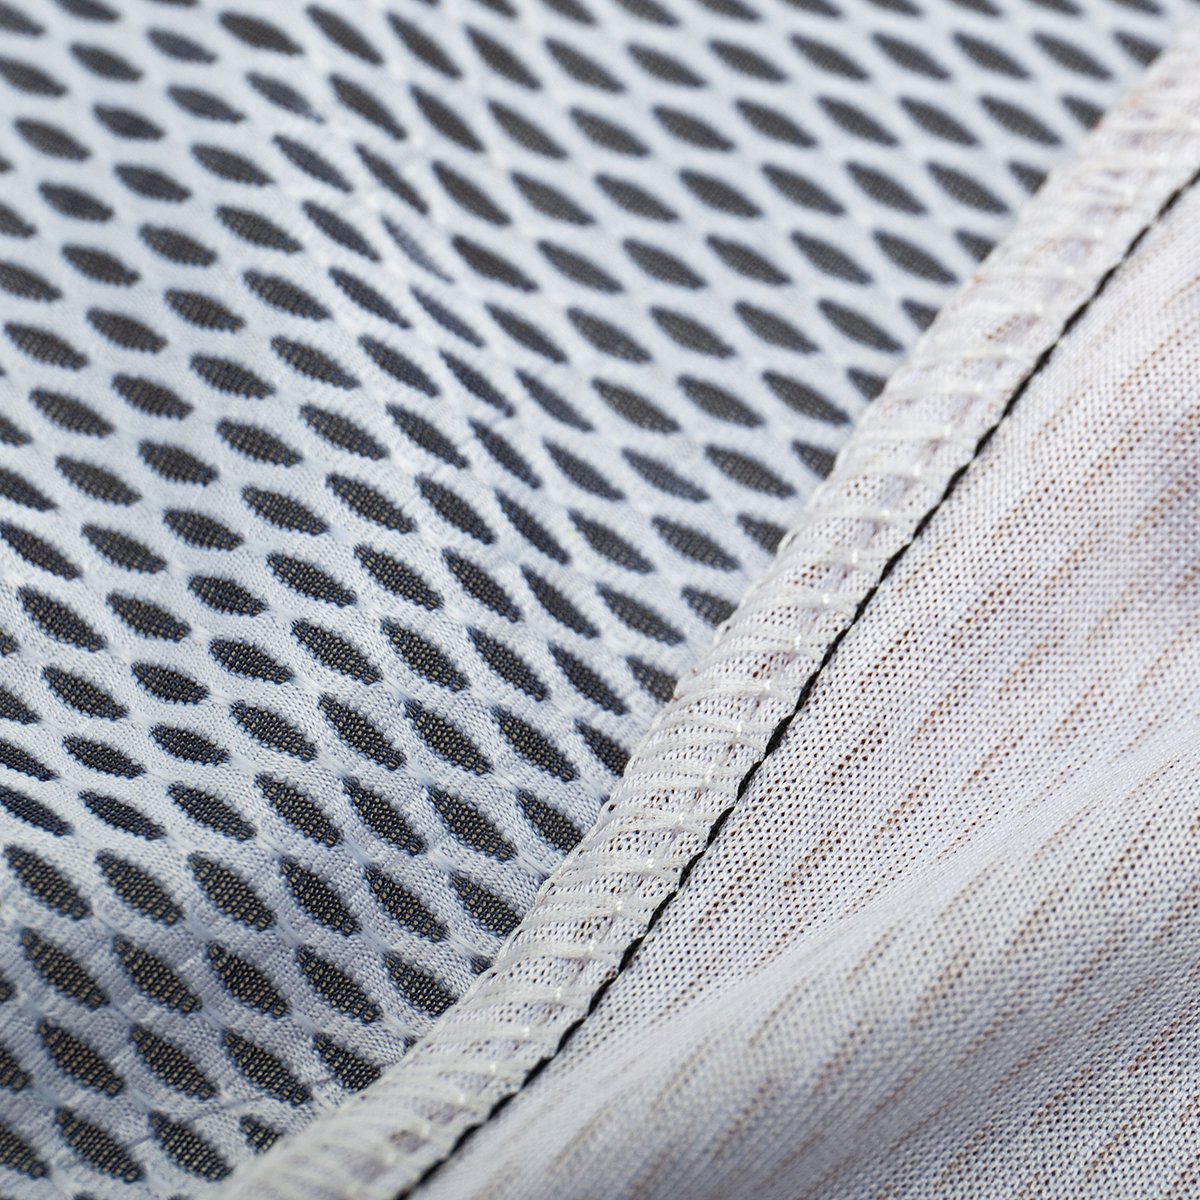 Cycling Jersey Fabric Close Up